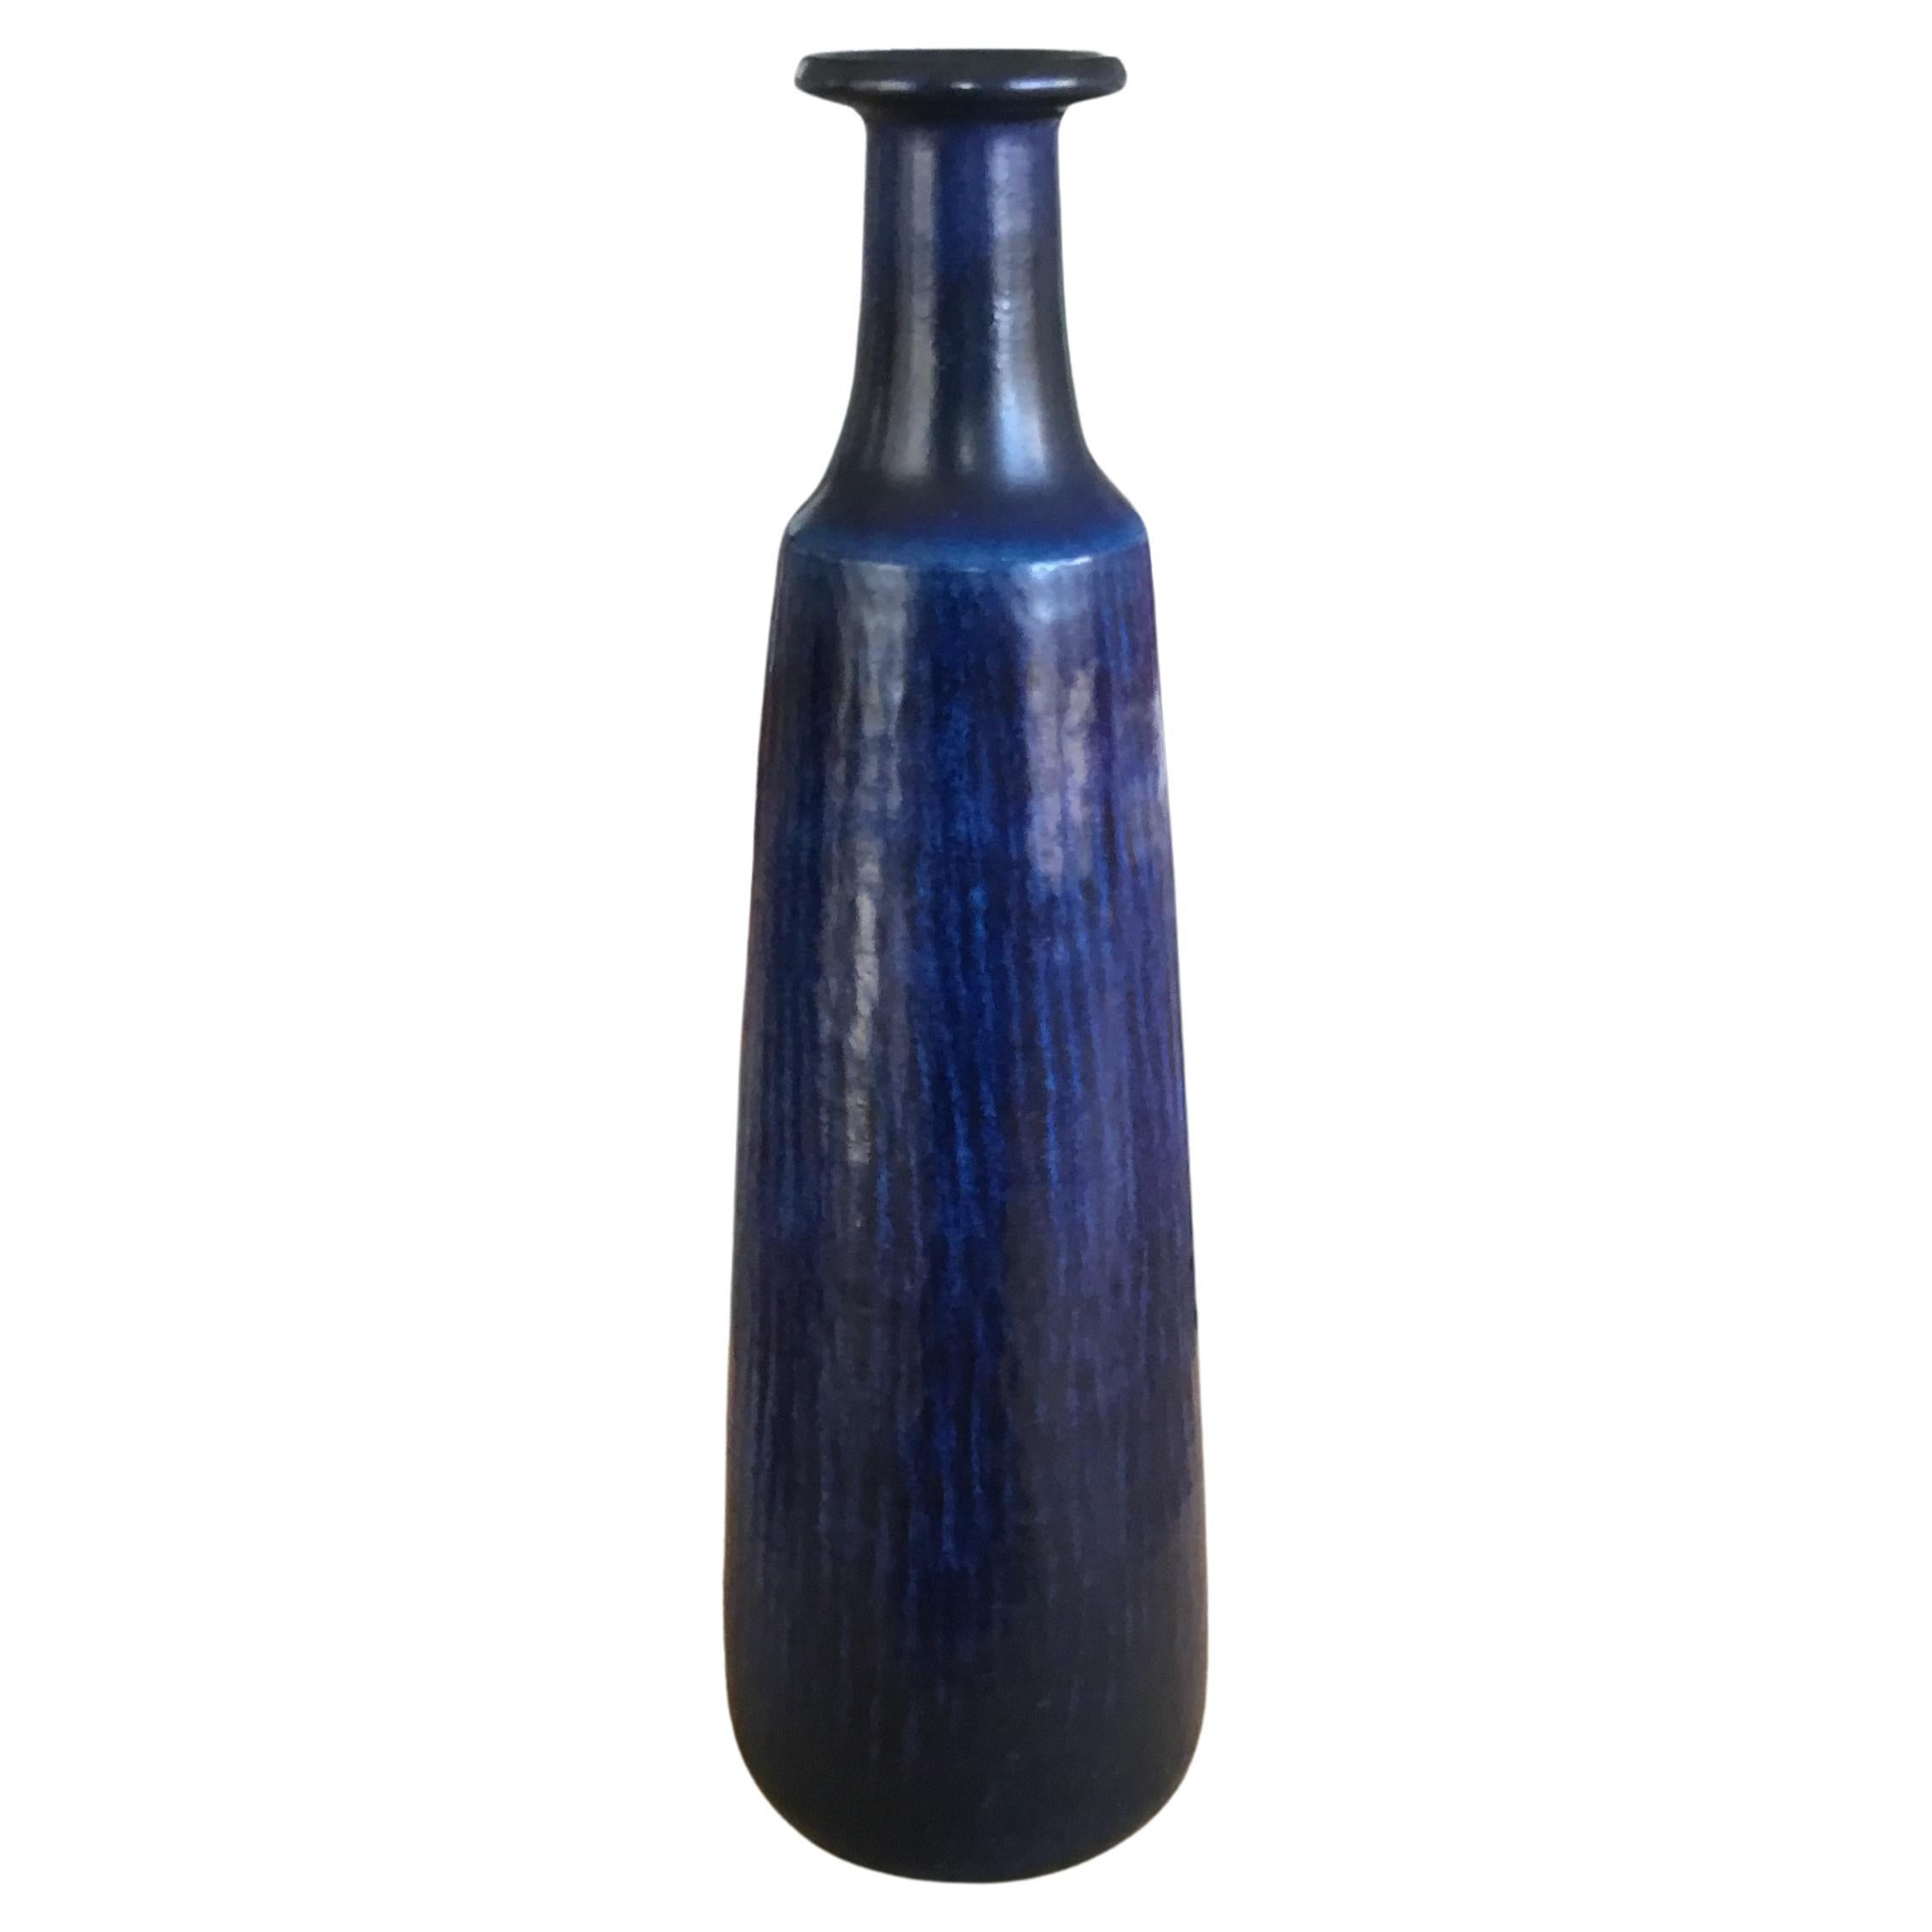 Ceramic Very Tall Gunnar Nylund Vase by Nymølle with Dark Blue Glaze 1960s For Sale